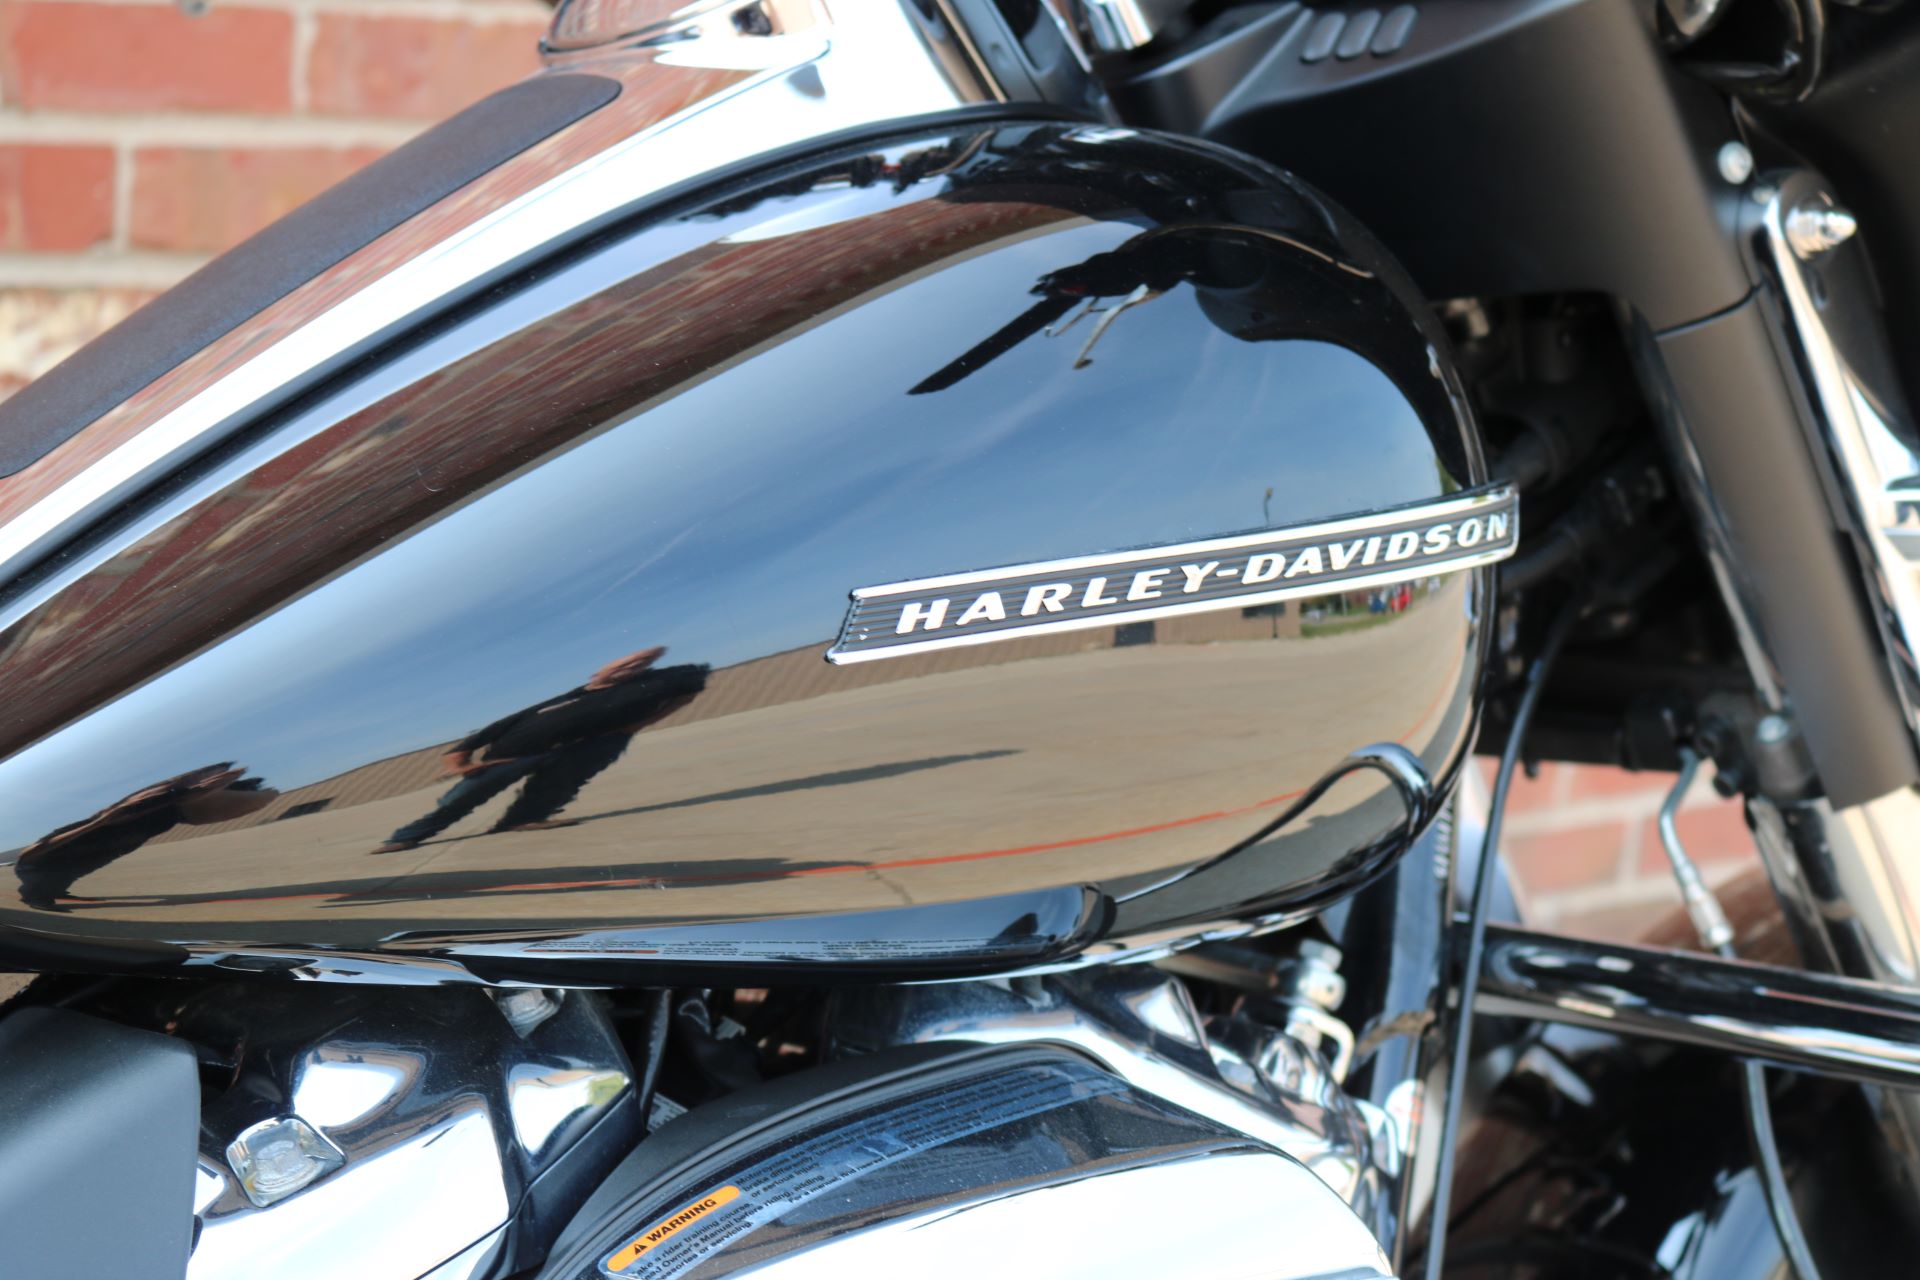 2018 Harley-Davidson ELECTRA GLIDE STANDARD POLICE in Ames, Iowa - Photo 6